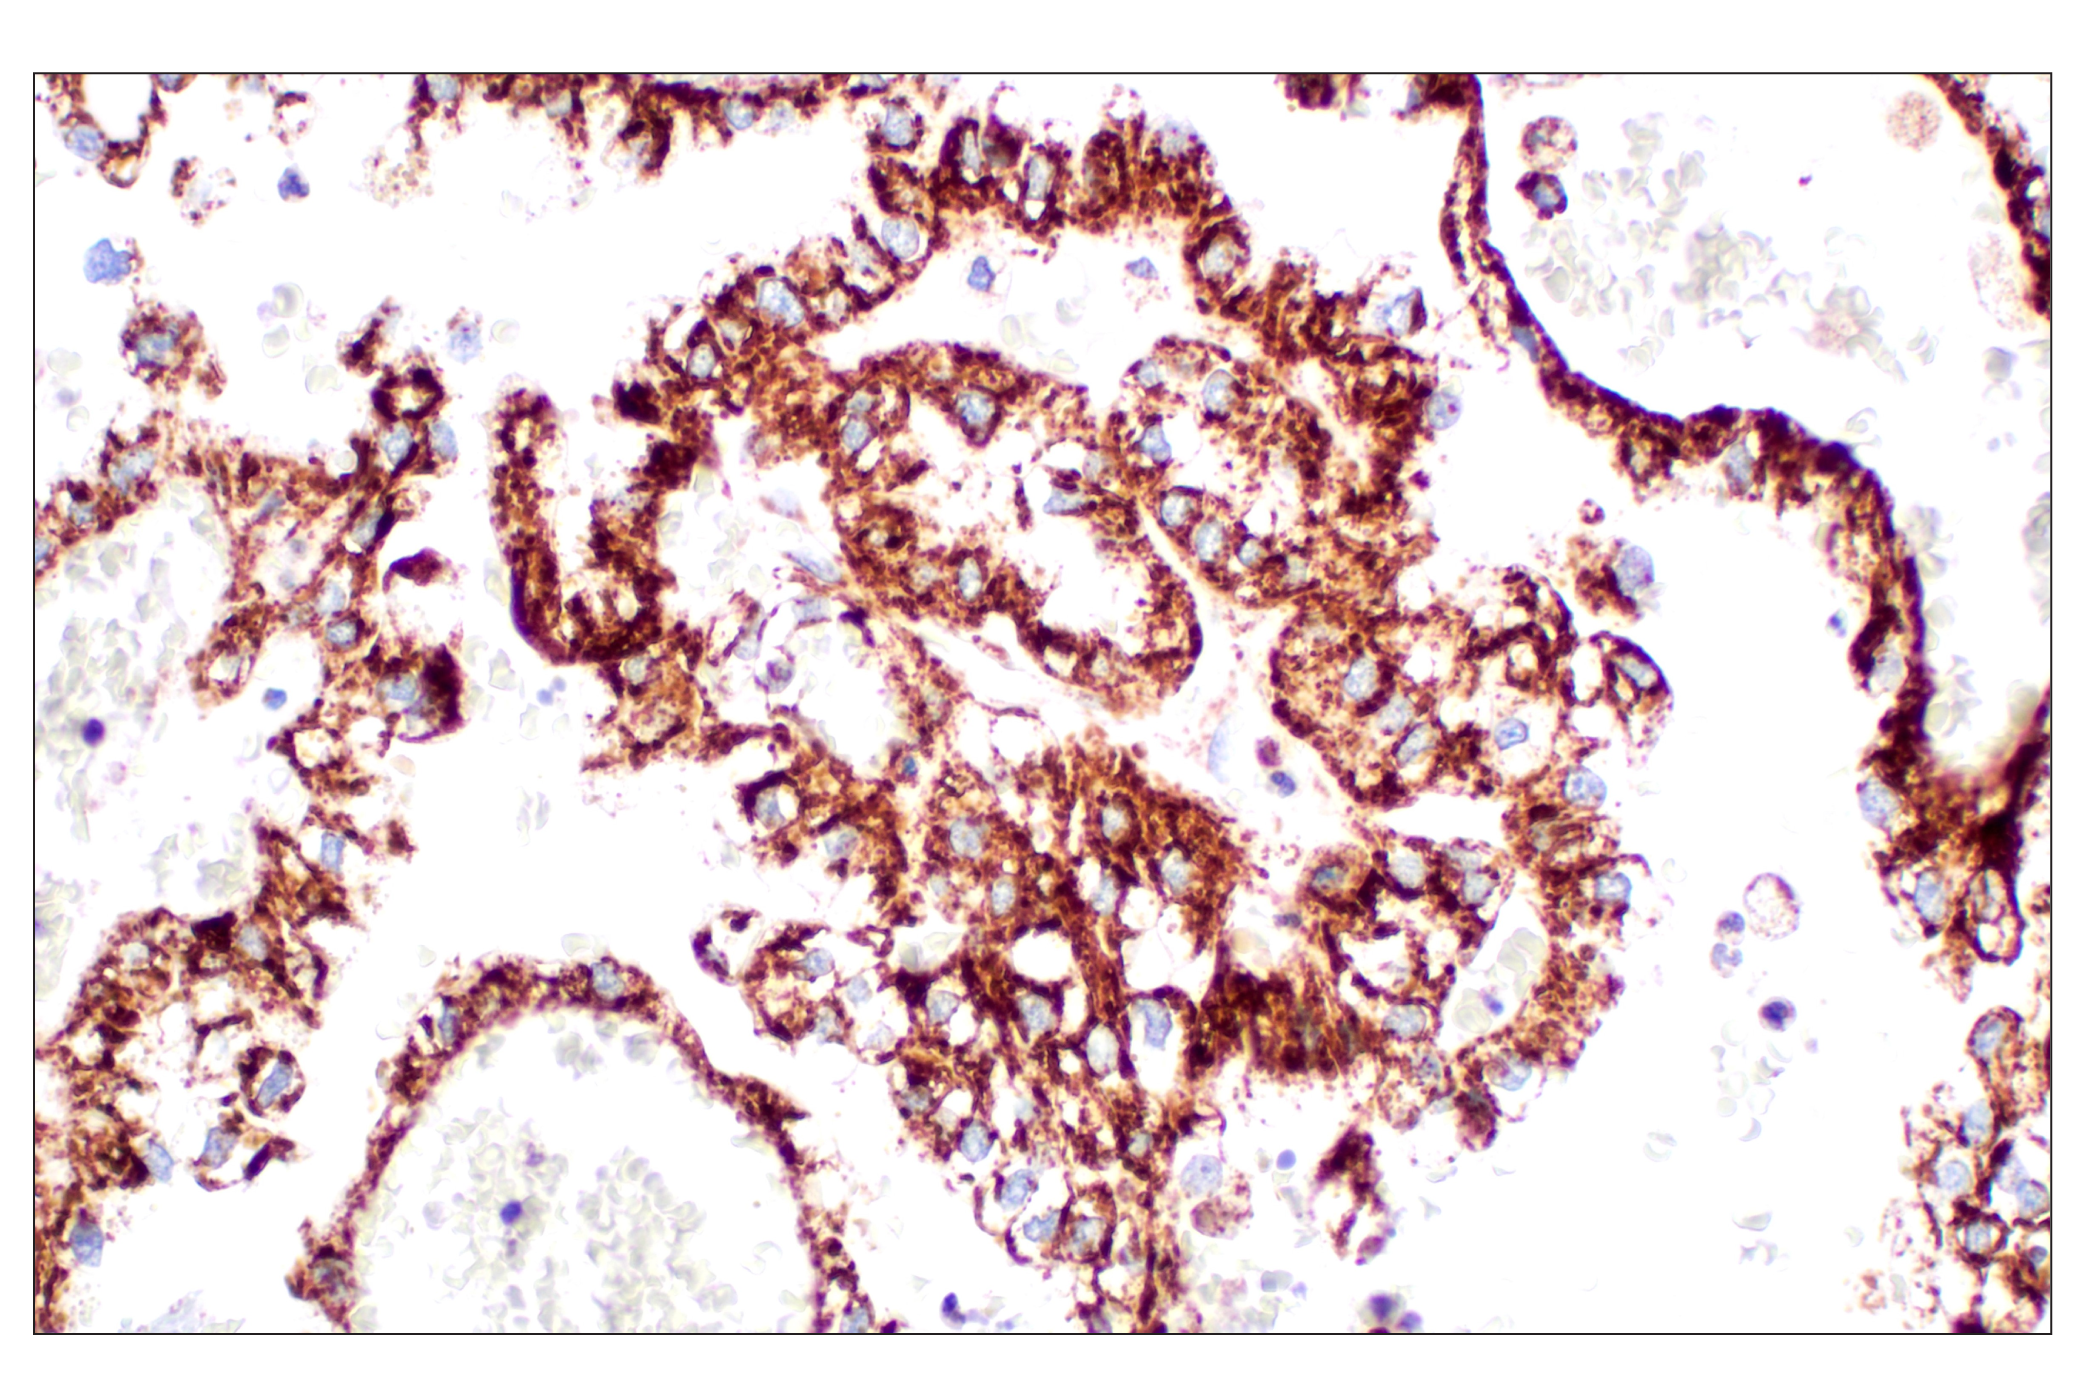  Image 19: Parthanatos Antibody Sampler Kit